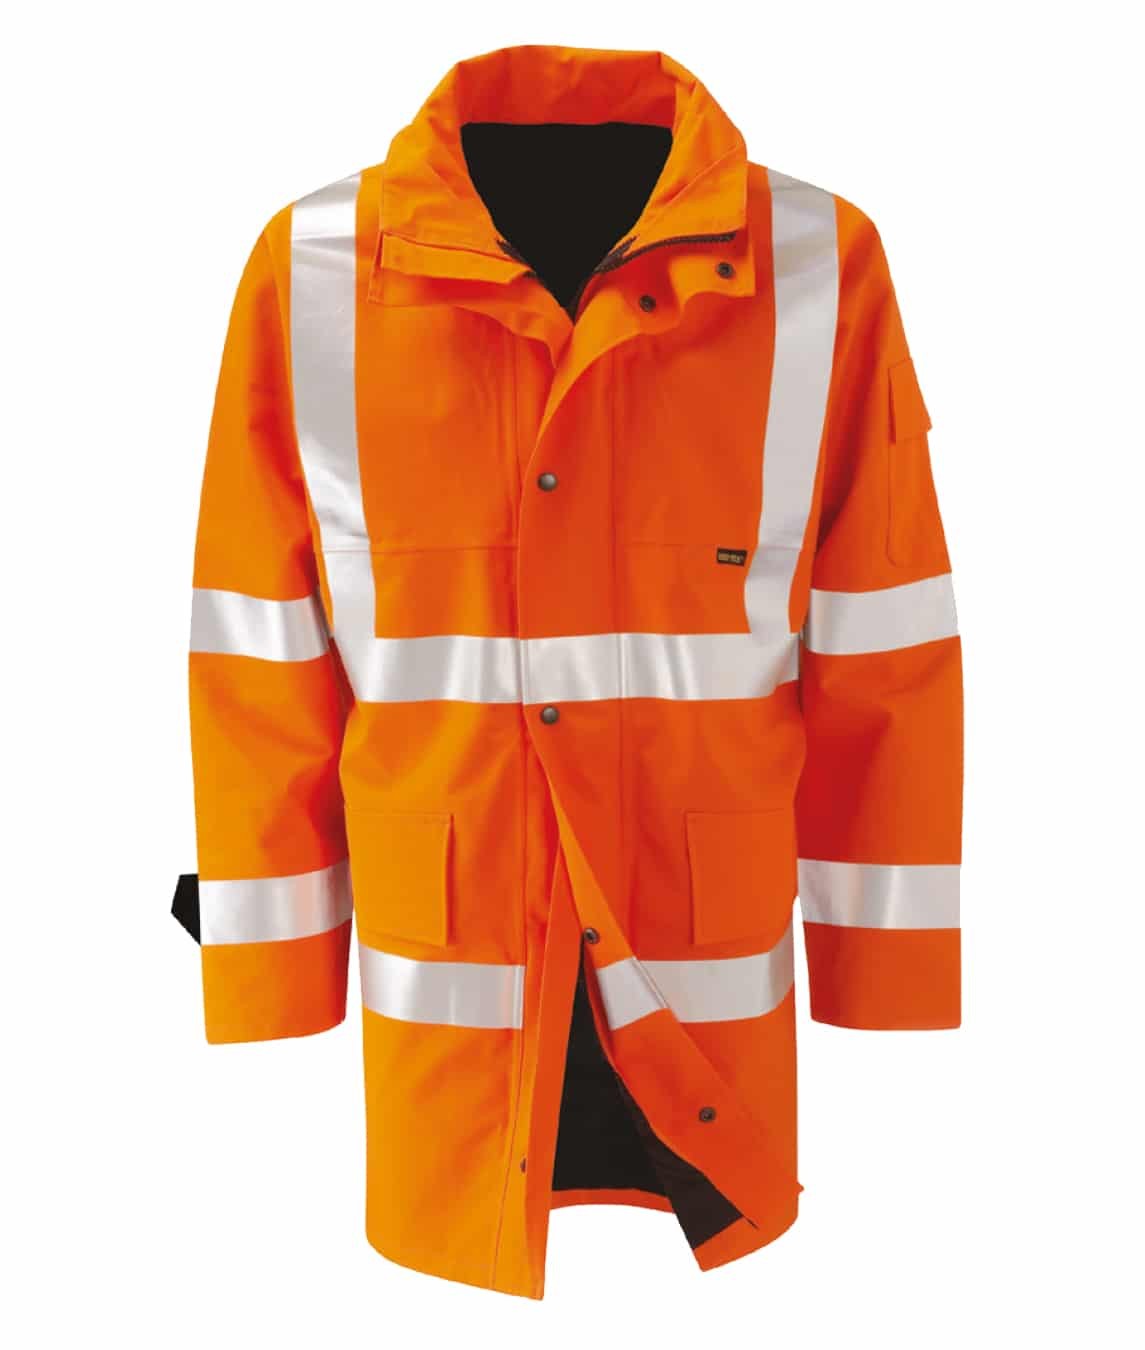 Amazon: 2 Layer Orange Gore-texÆ Jacket